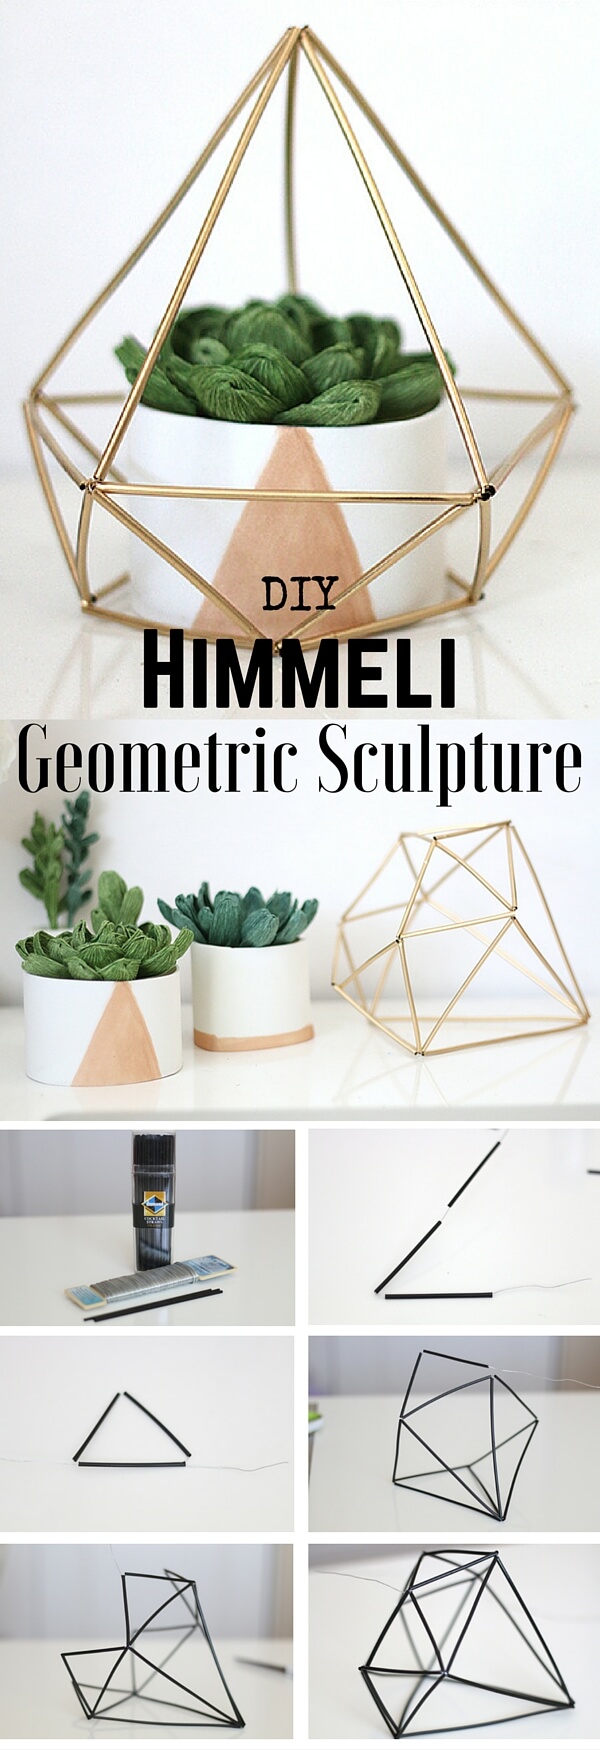 himmeli-geometric-sculpture-k4craft Easy DIY Home Decor Crafts - Step by step